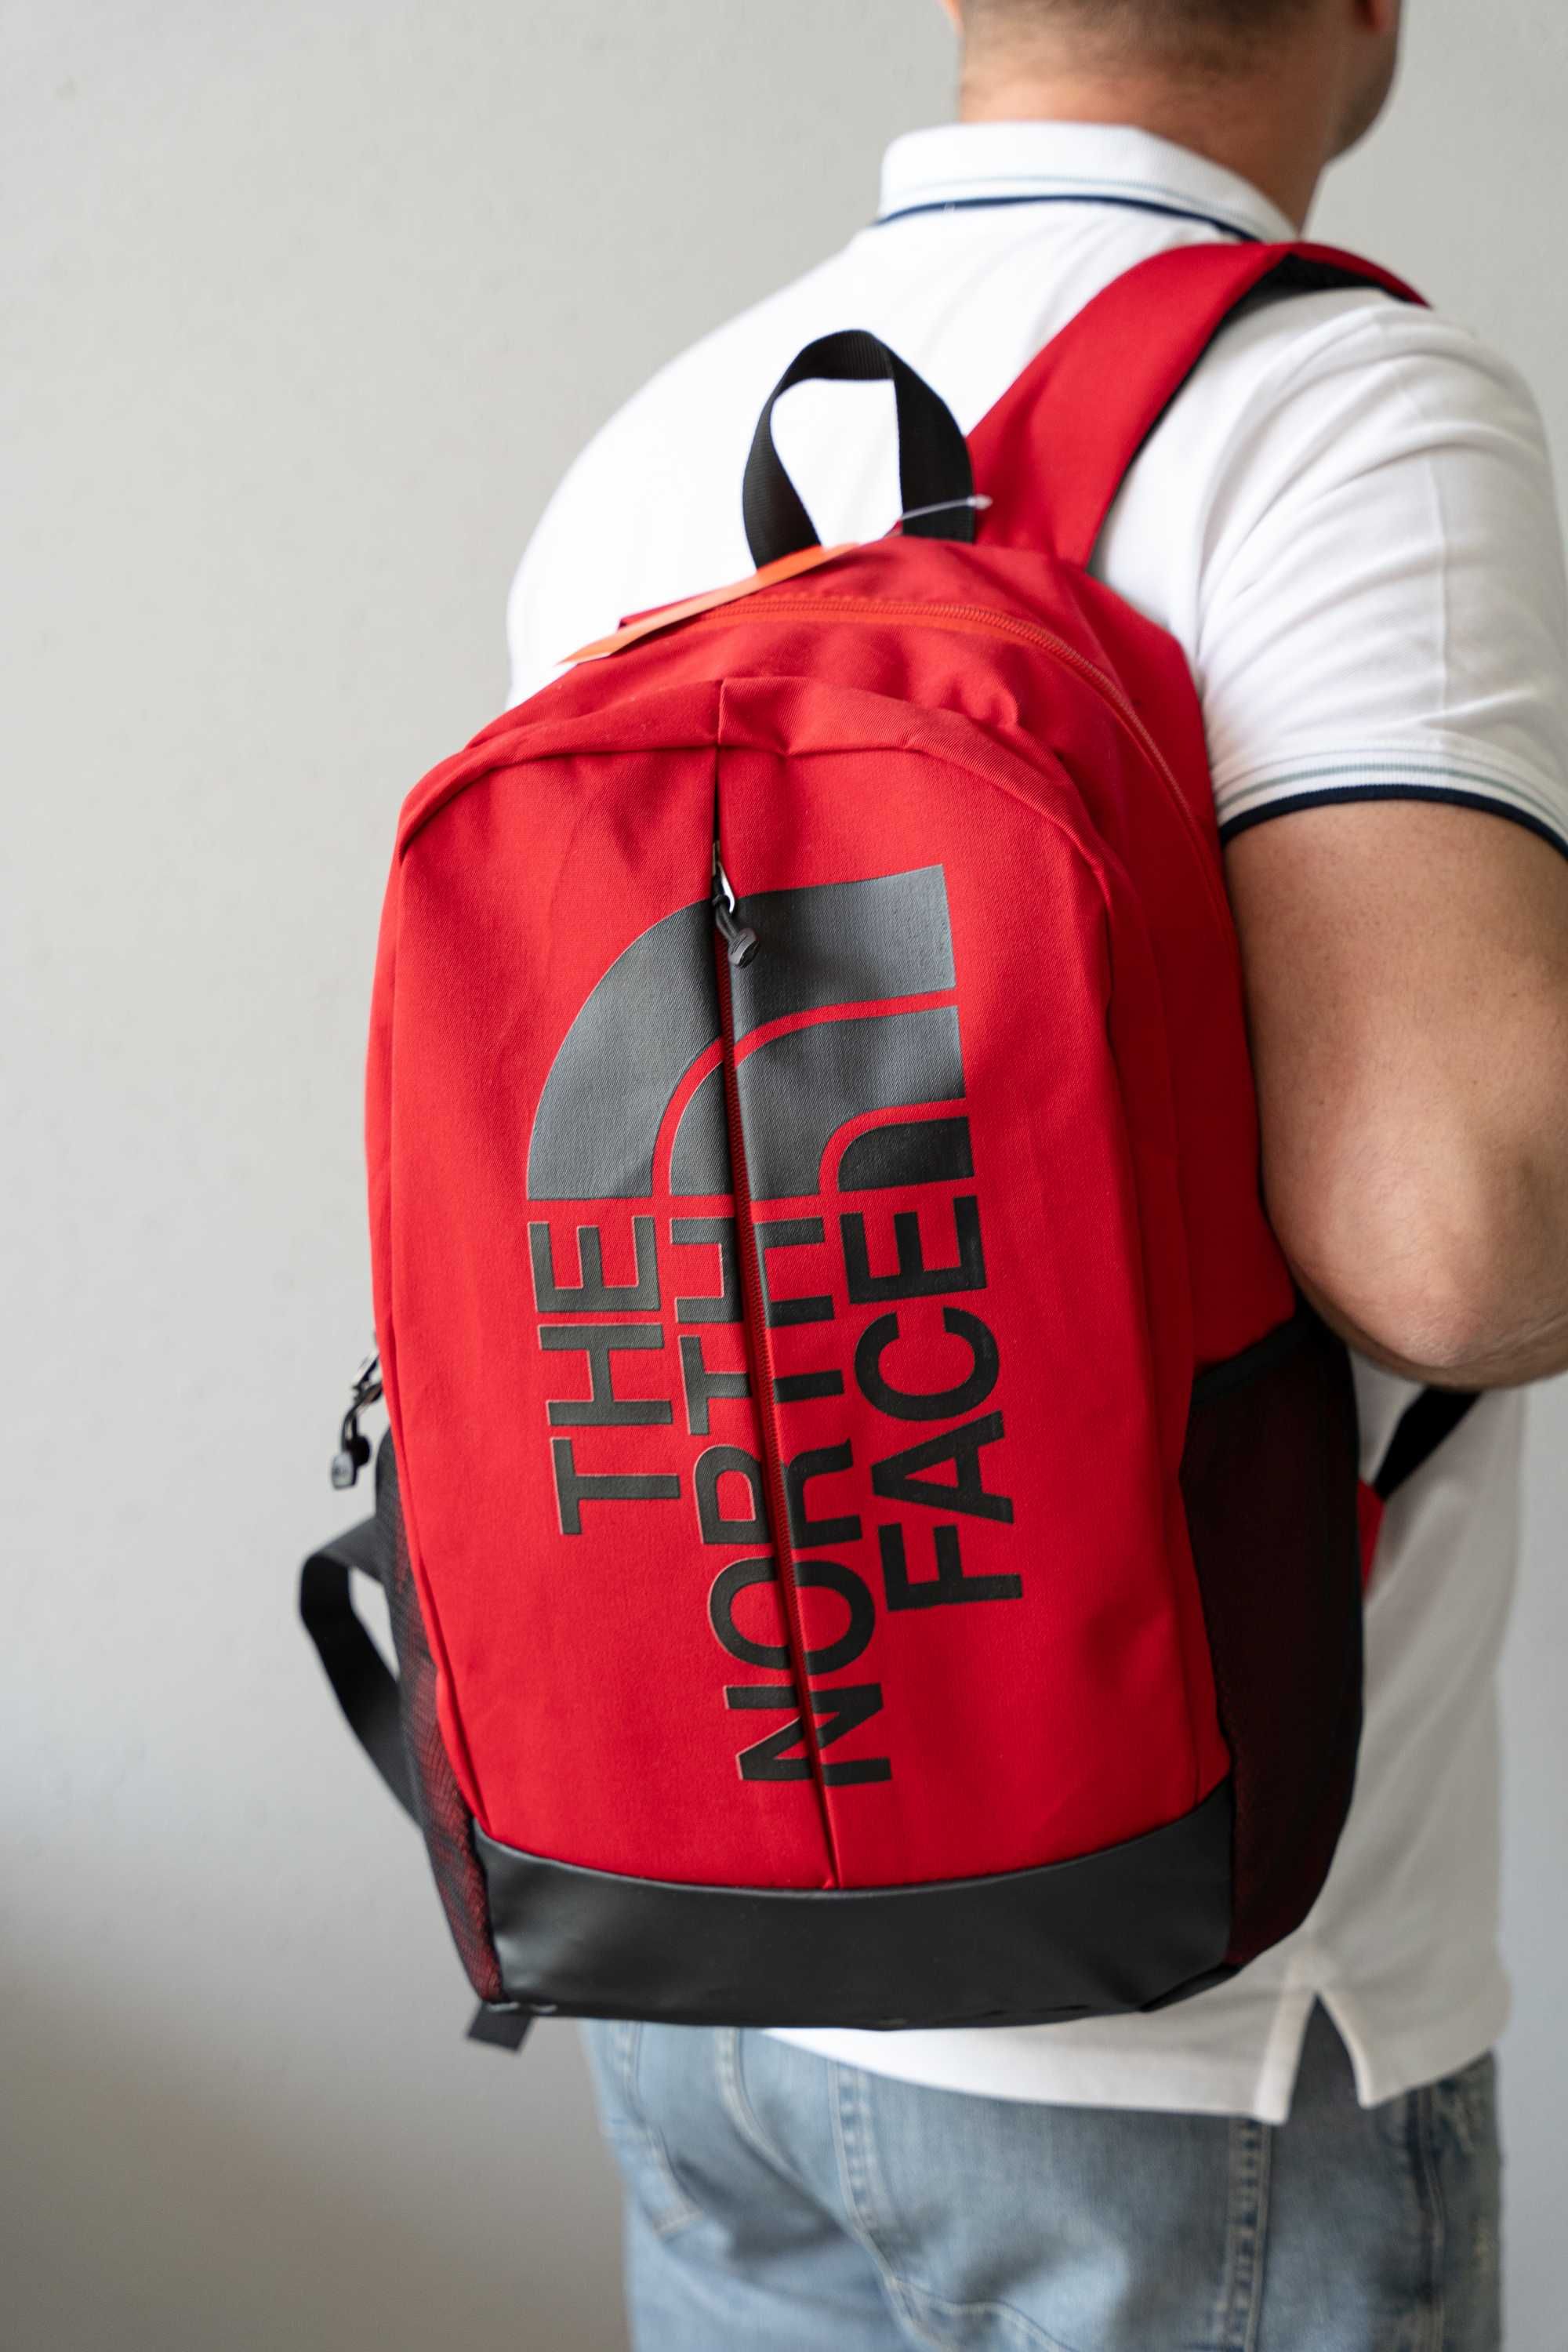 Рюкзак The North Face/Міський рюкзак/Спортивный рюкзак/Для путешествий